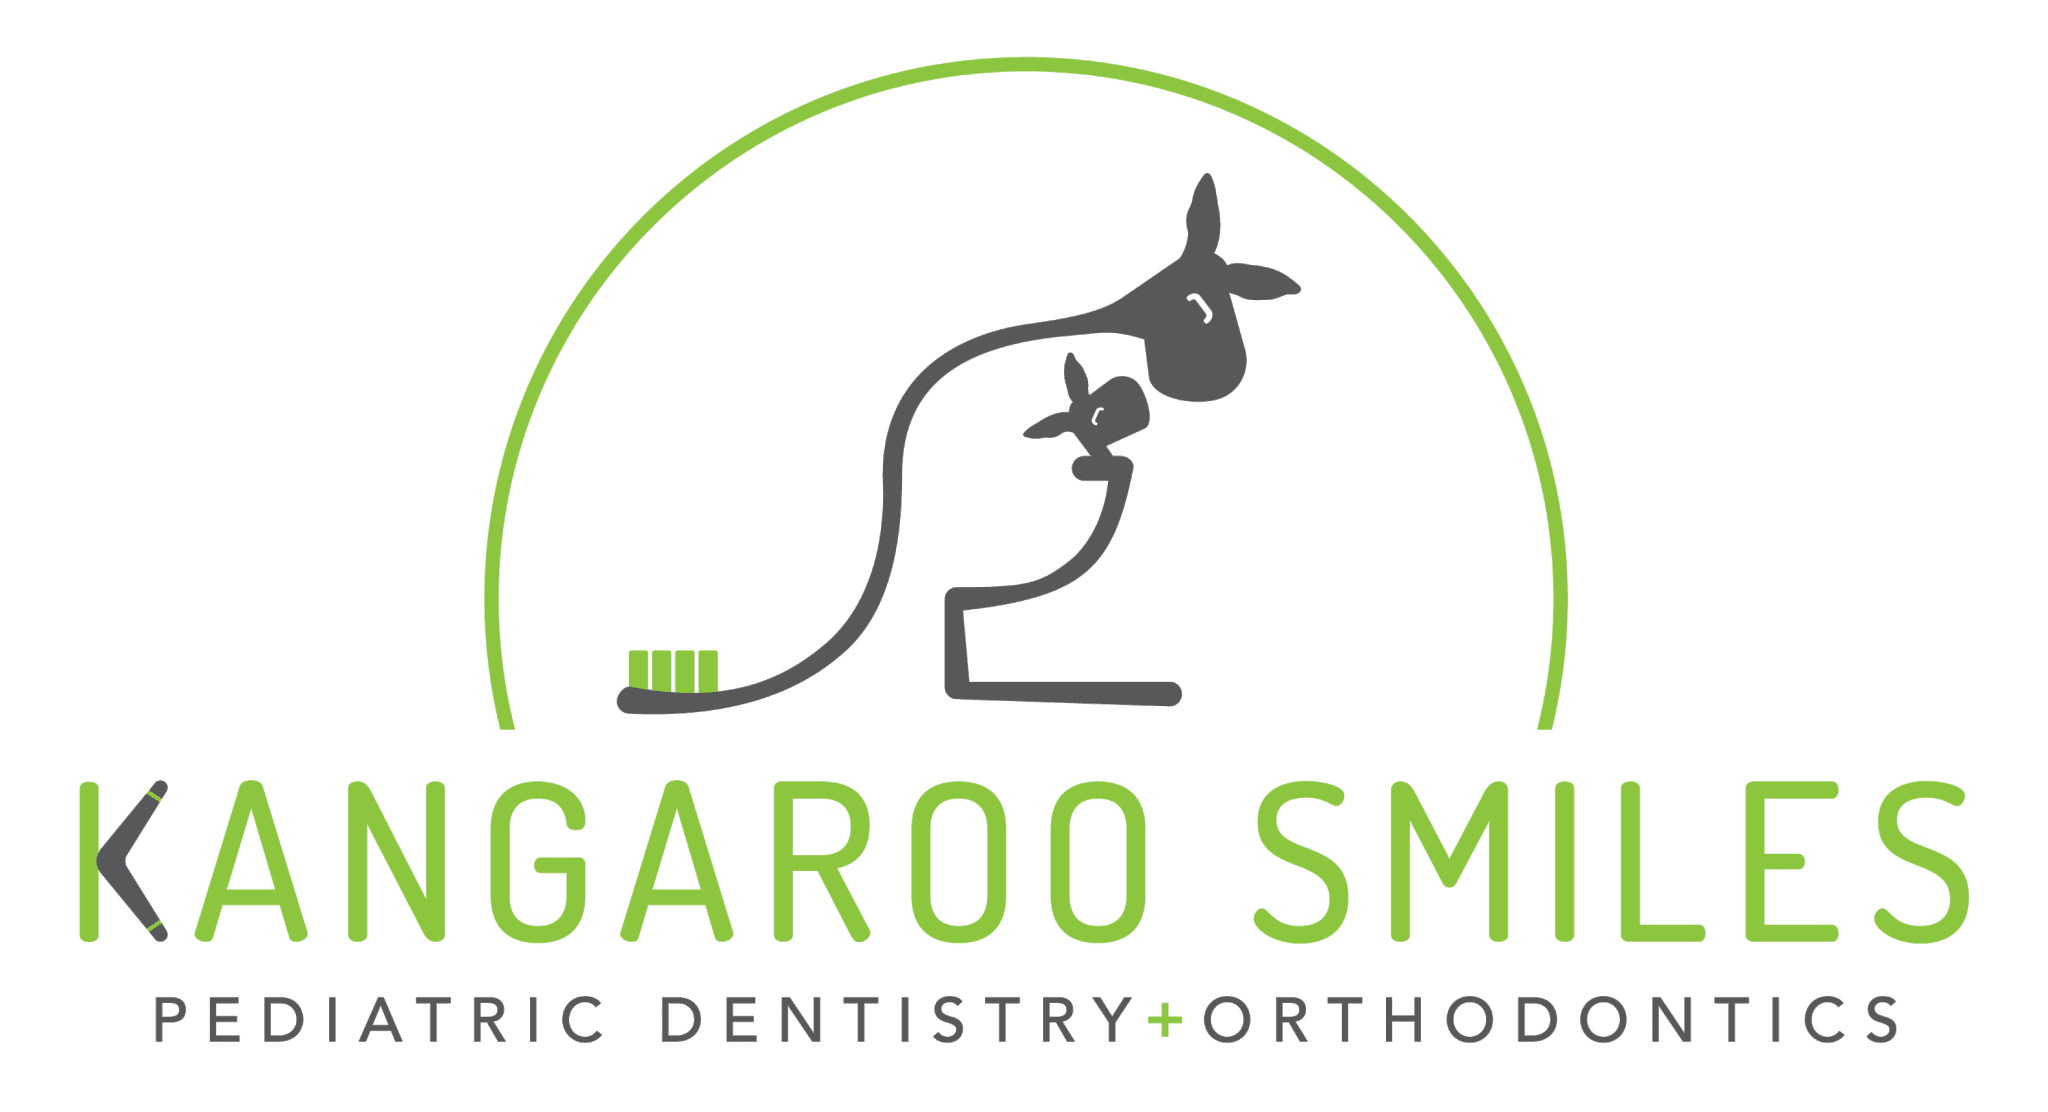 Kangaroo Smiles - Pediatric Dentistry + Orthodontics